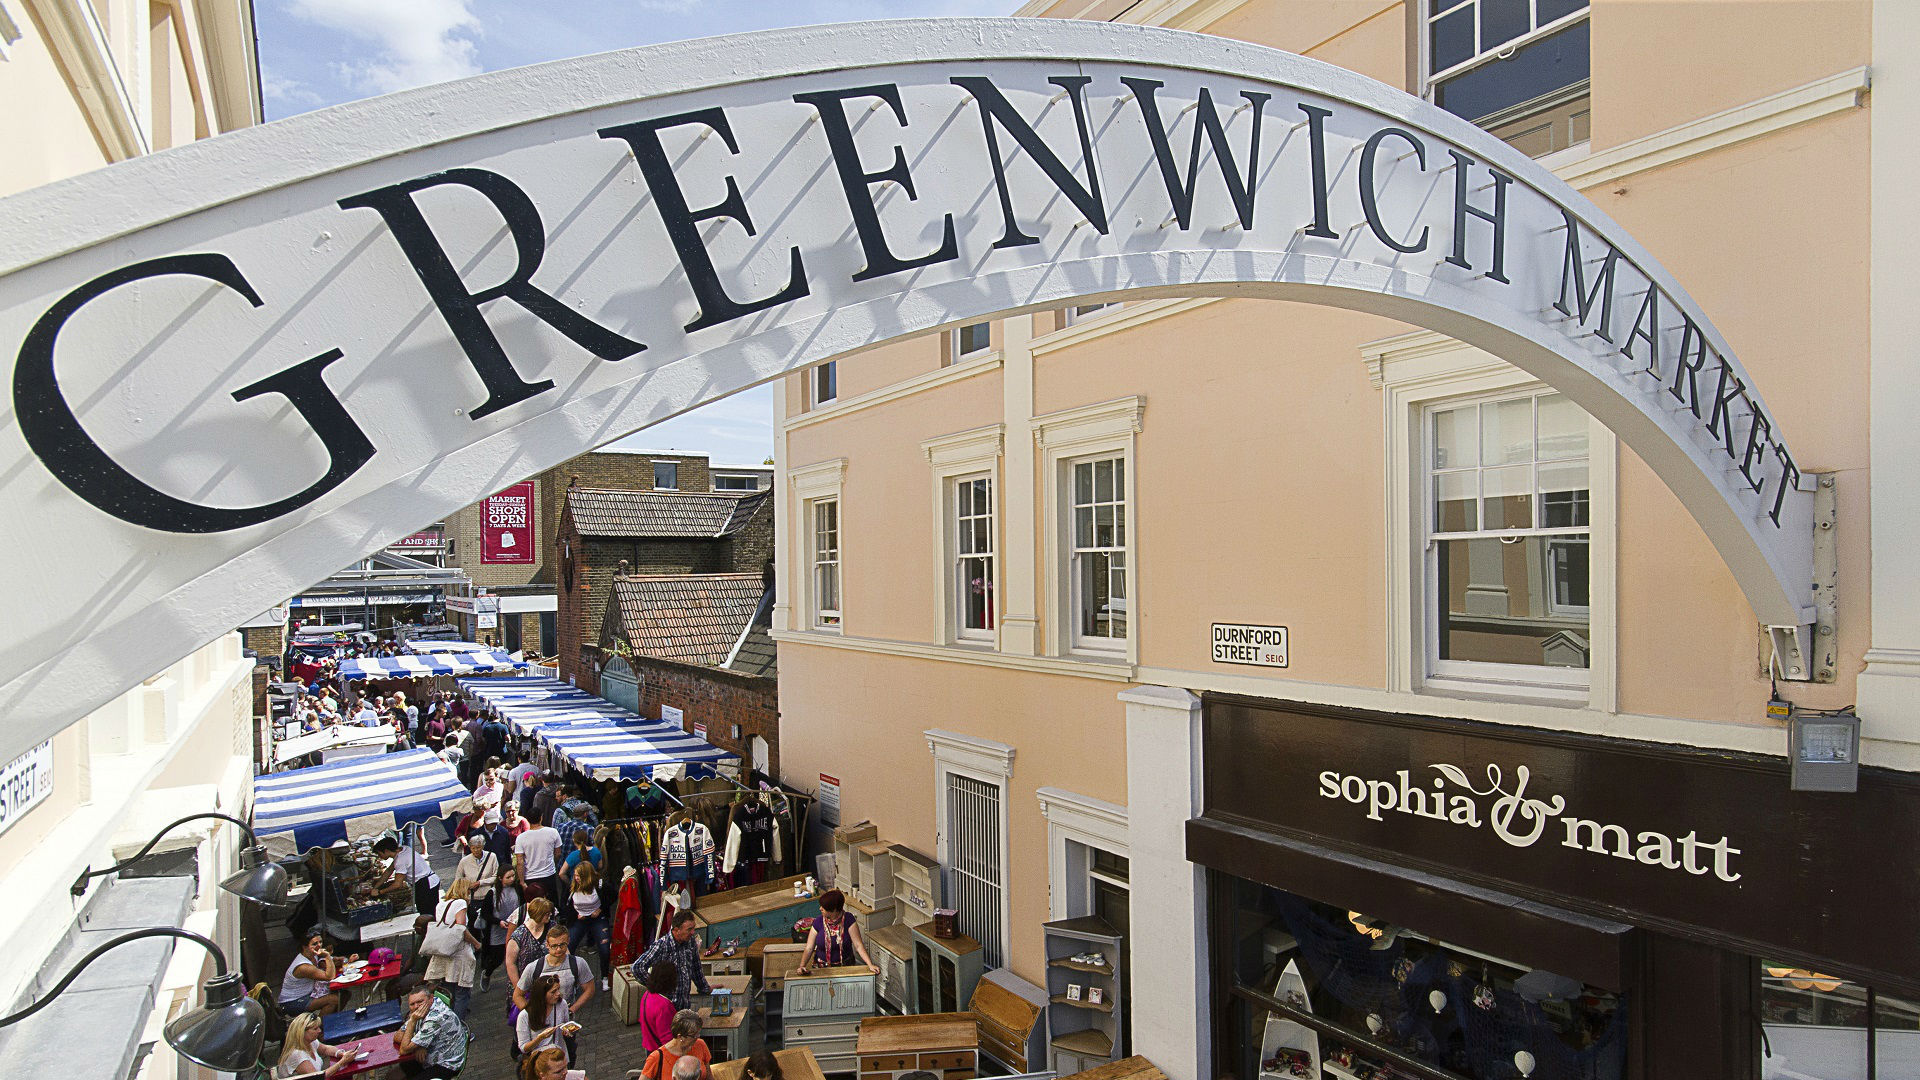 Вид с воздуха на рынок Гринвич с прилавками и покупателями на Данфорд-стрит. Автор фото: Роберт Грешофф. Изображение предоставлено Гринвичским рынком